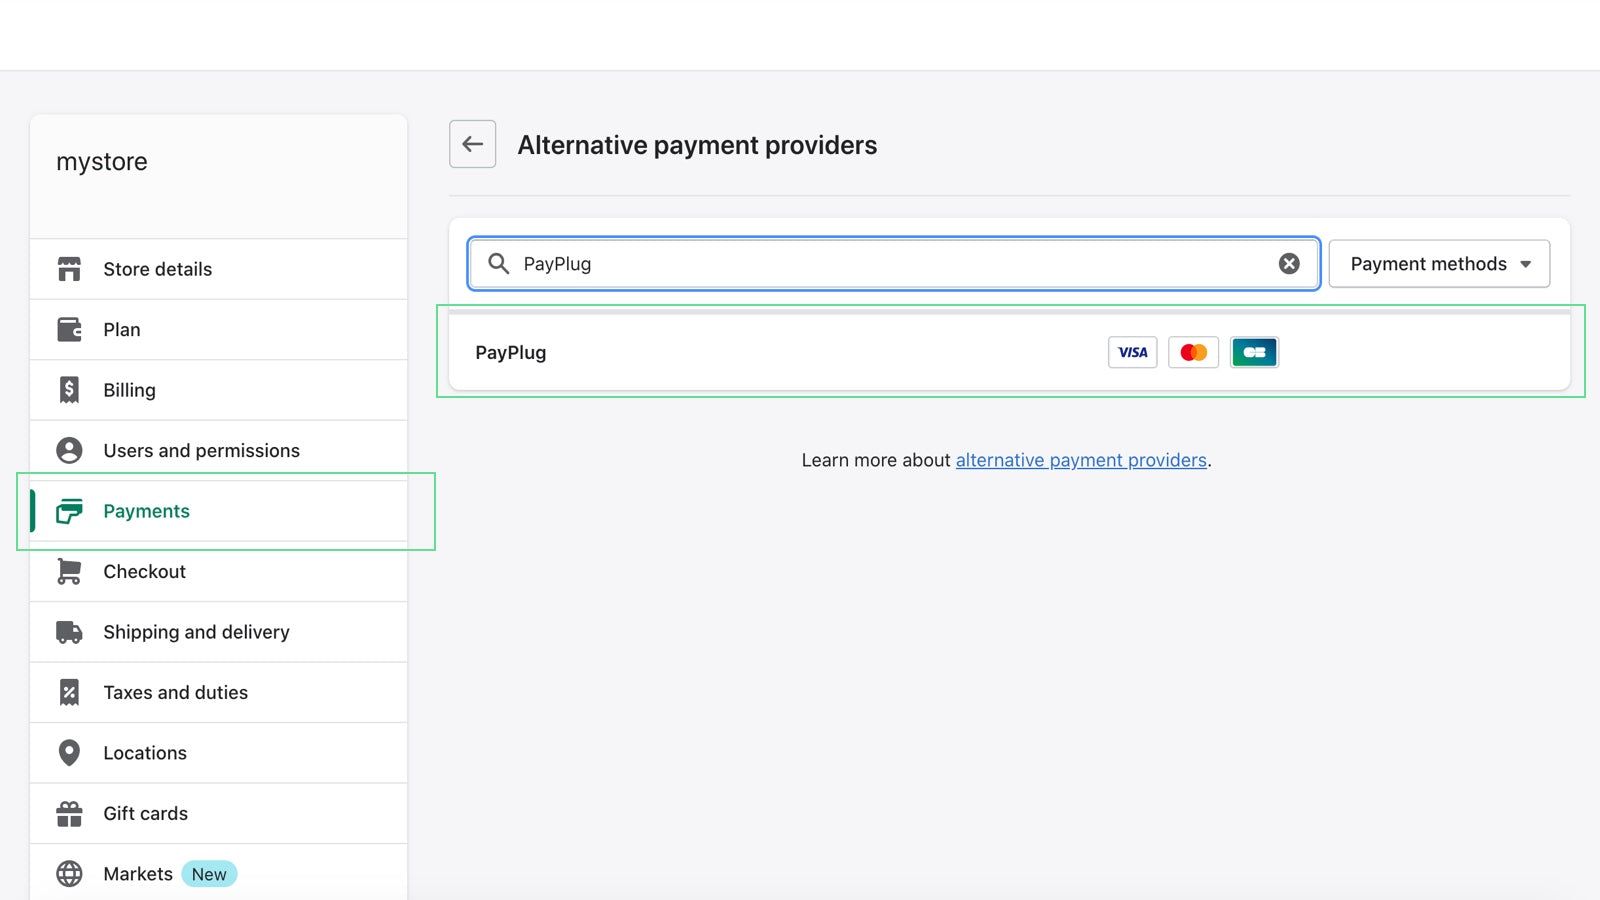 Choose PayPlug in the alternative payment method list